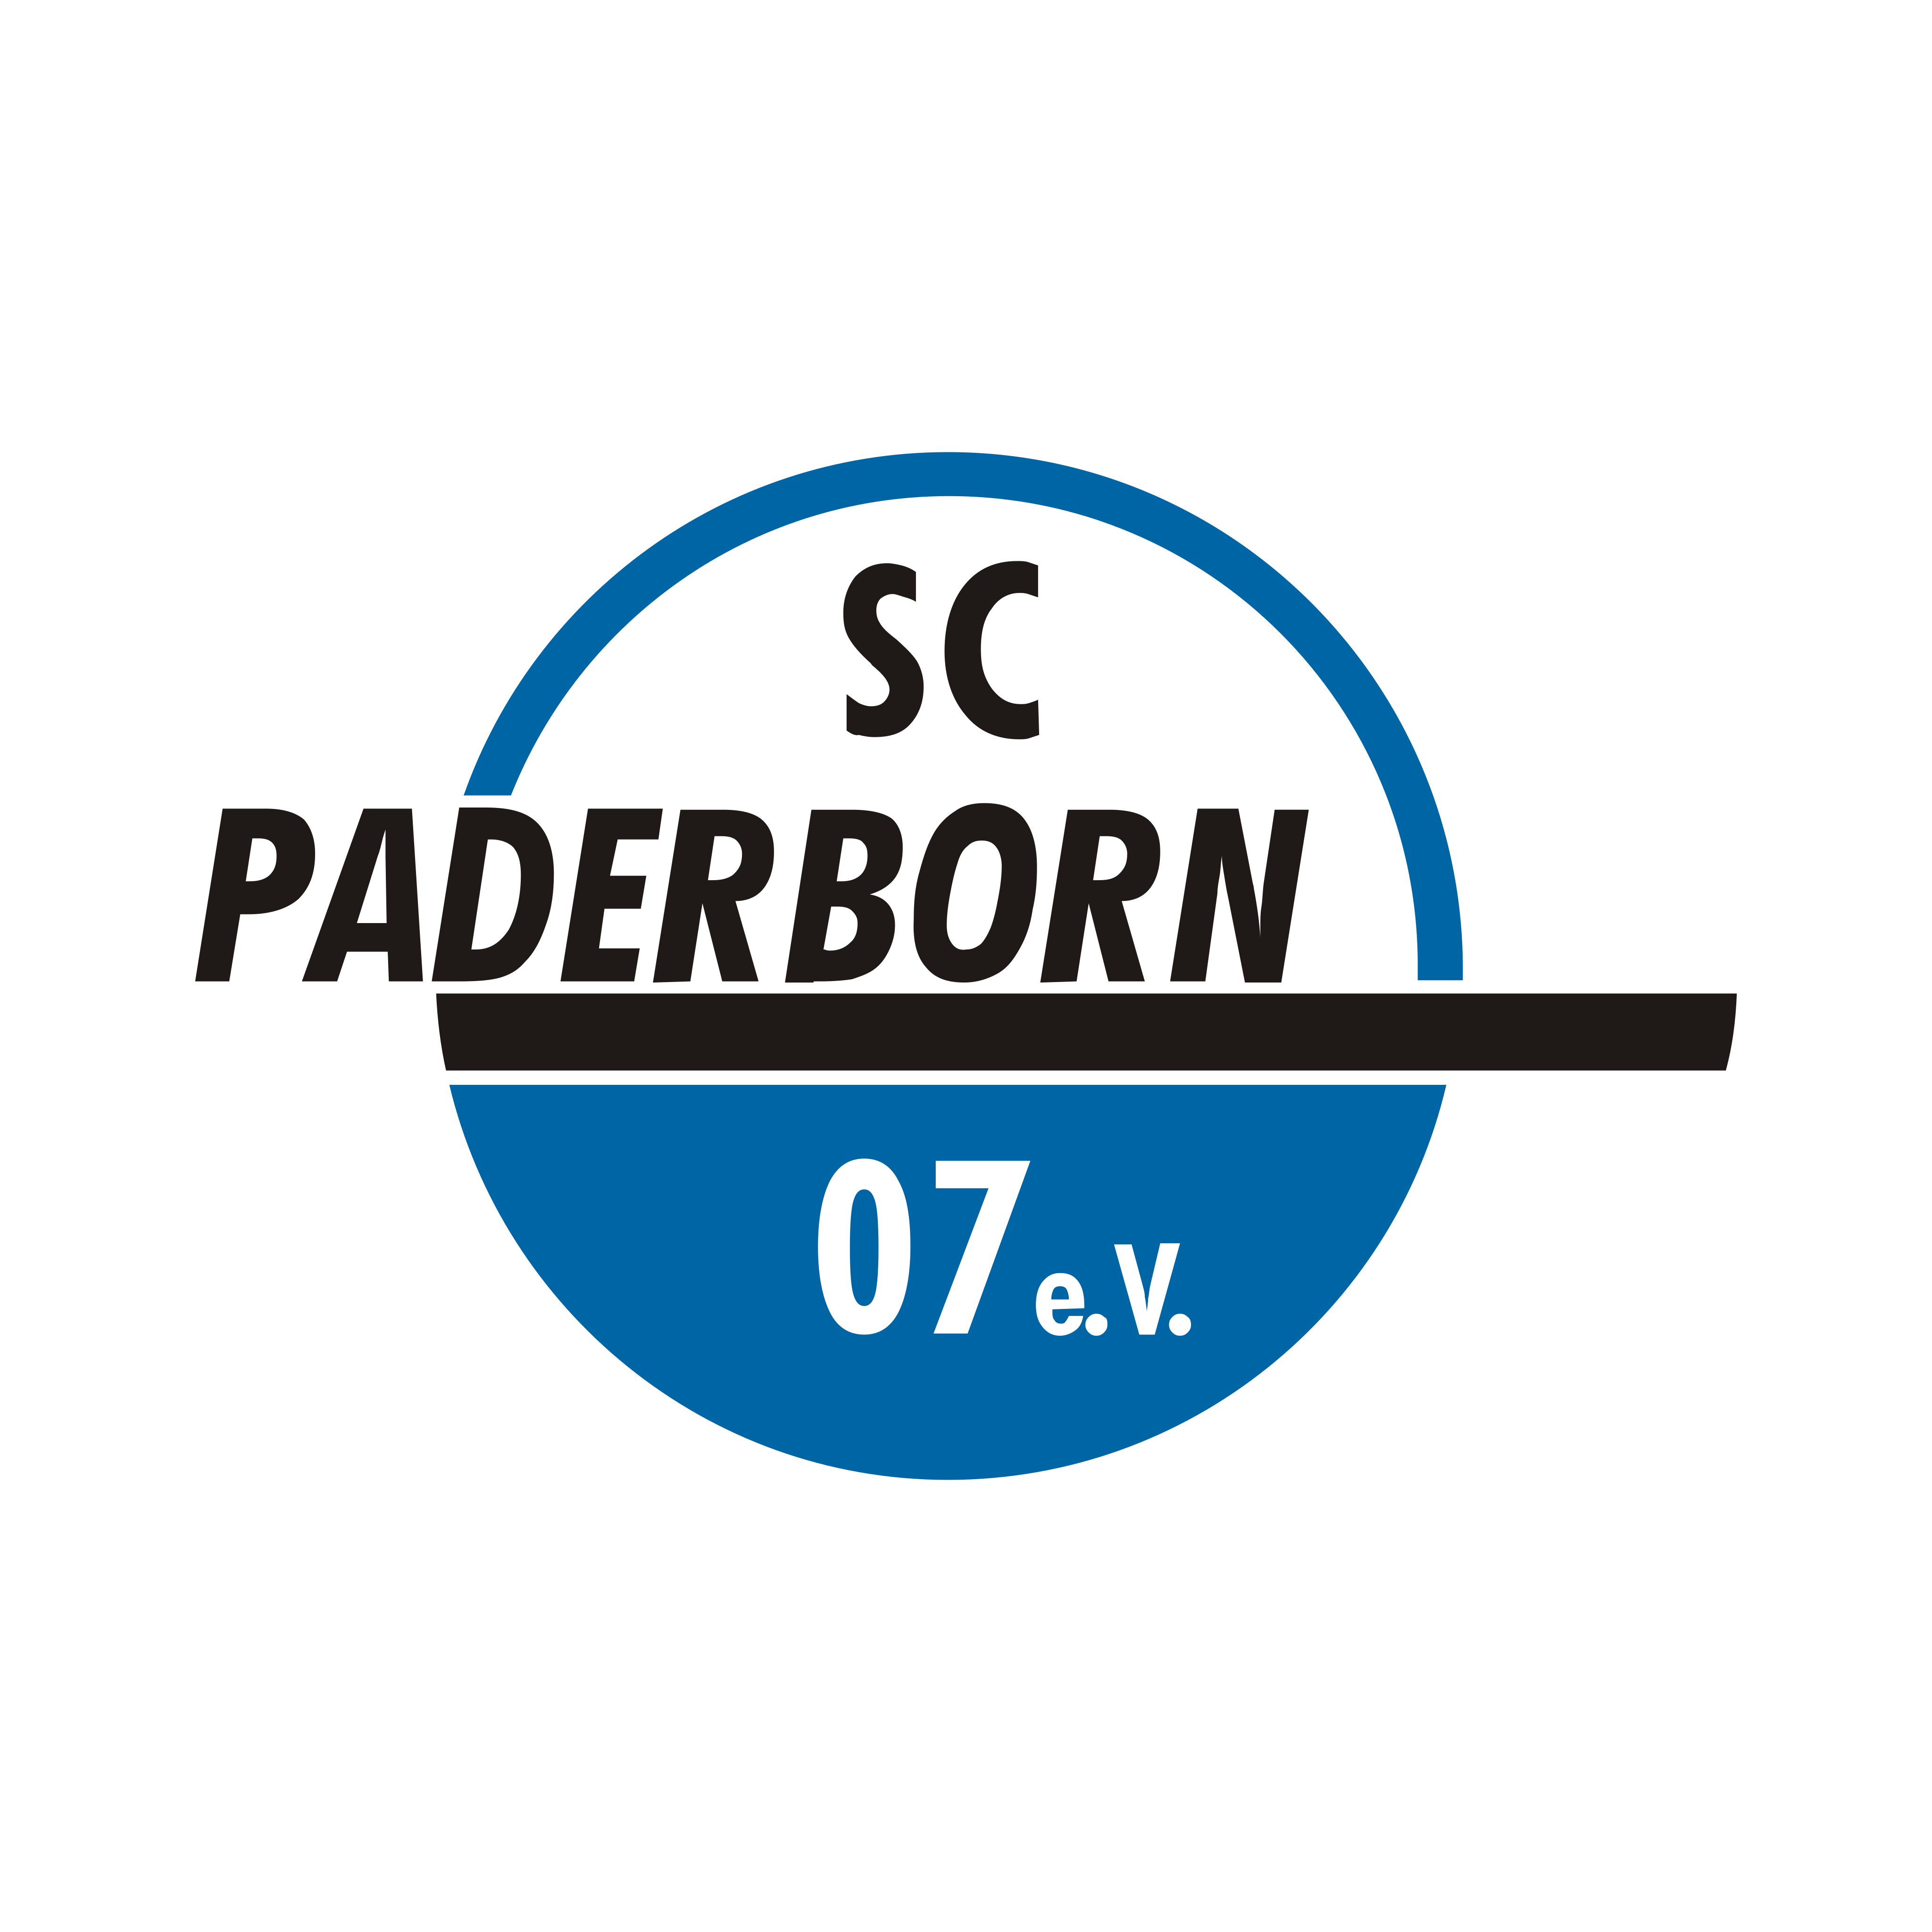 SC Paderborn 07 Logo PNG.